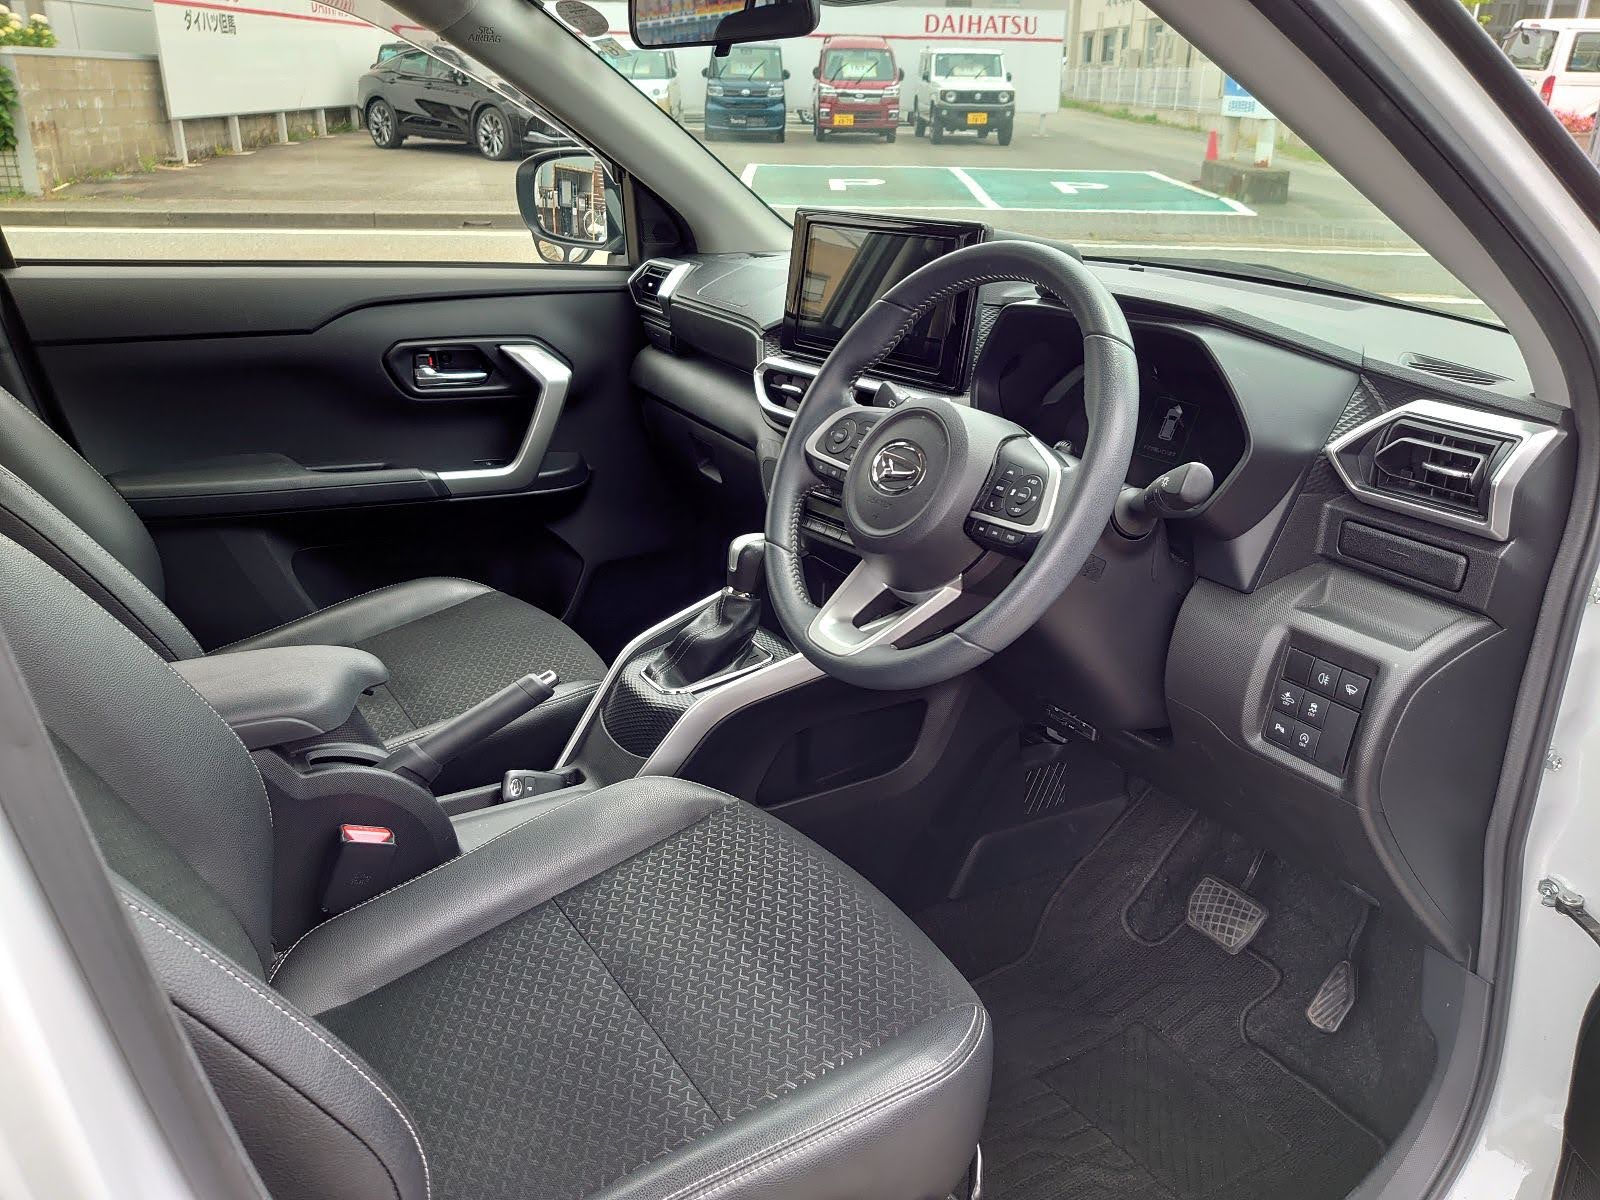 Daihatsu rocky interior driver front seat